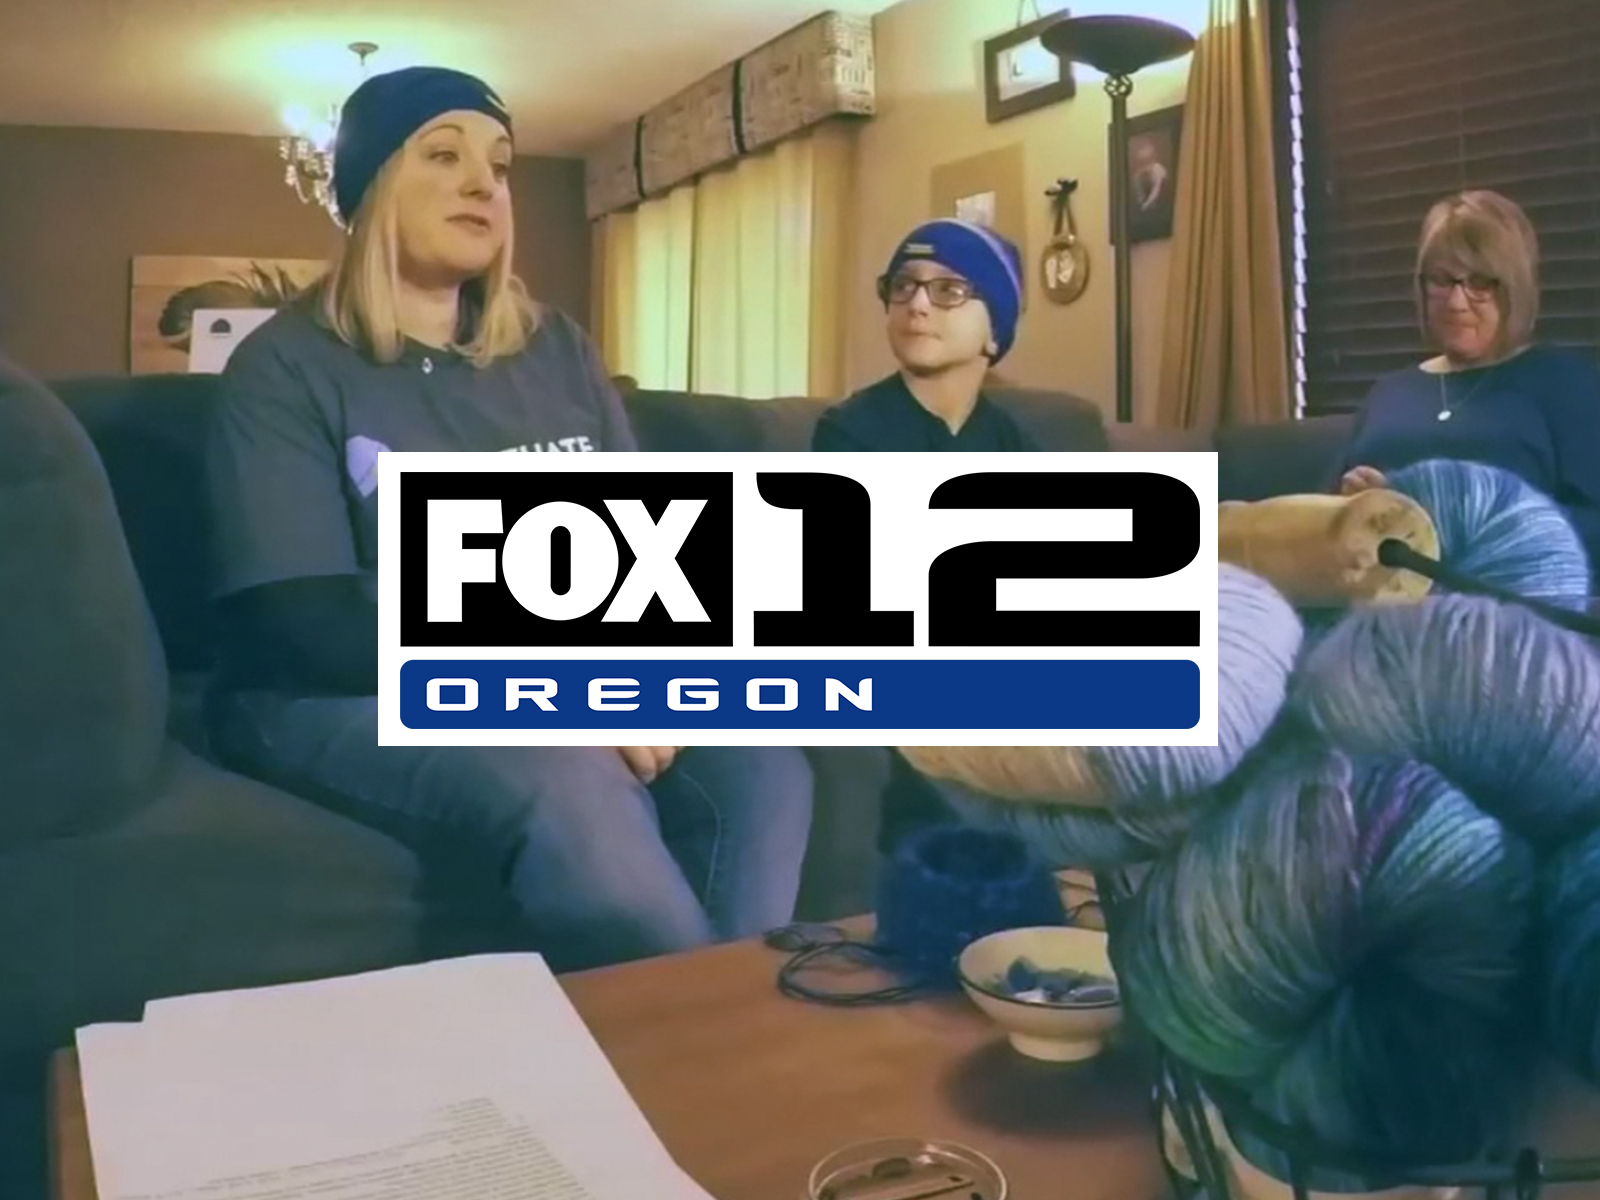 Fox 12 Oregon logo overlaid on image of 2 women and boy knitting hats